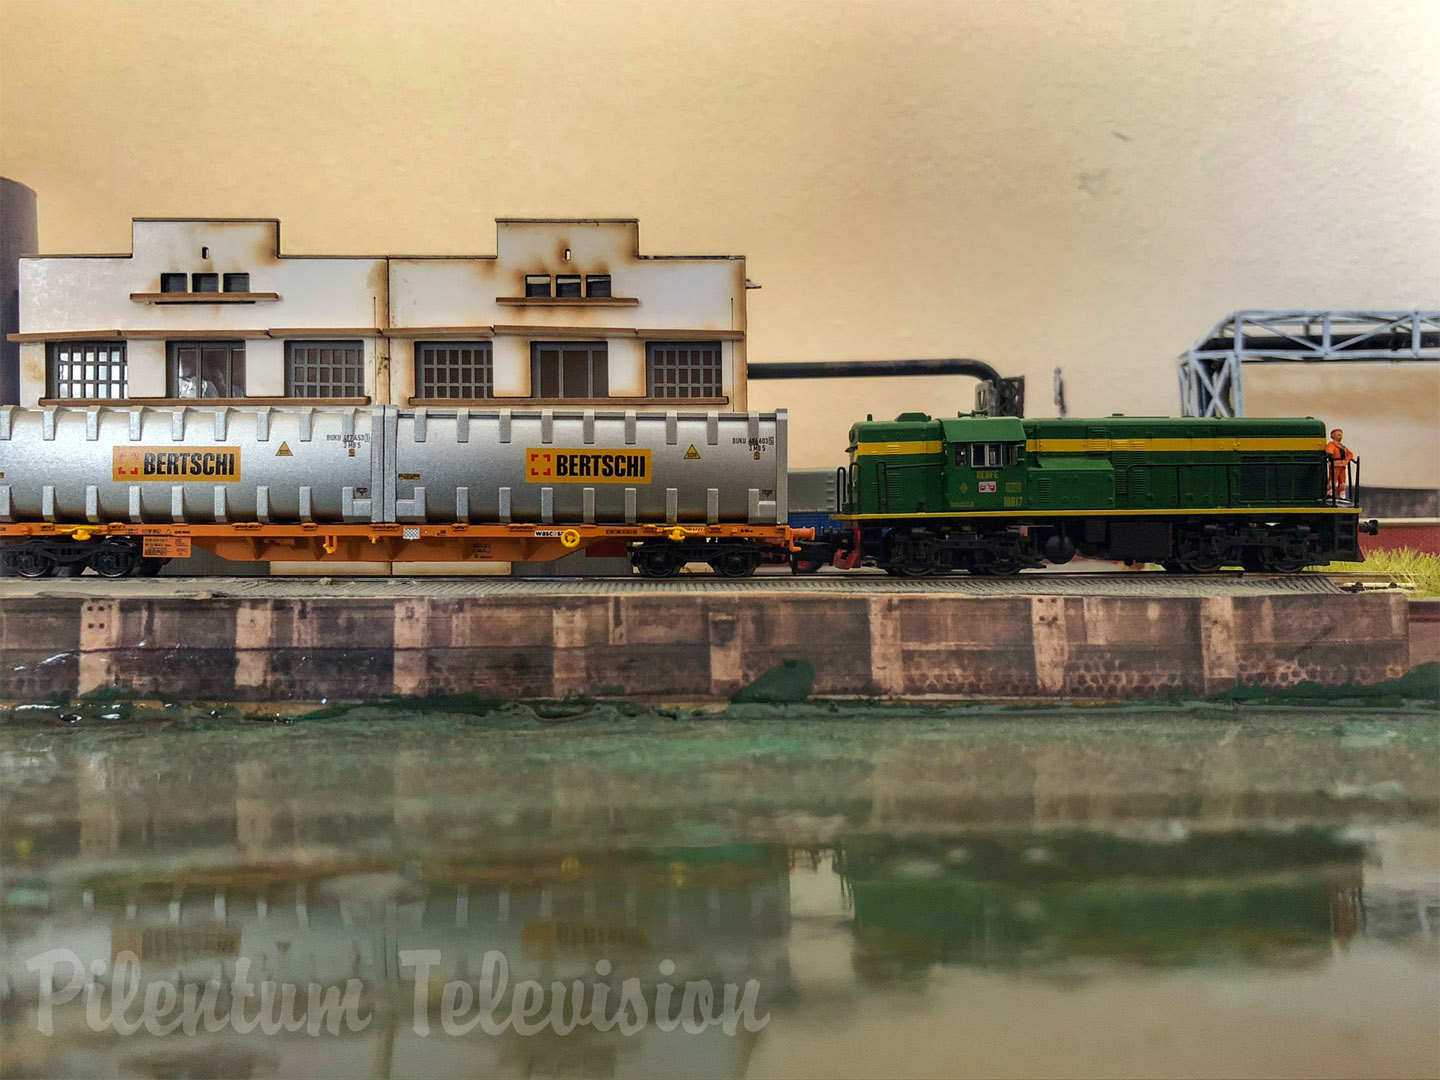 Trenes RENFE en miniatura - Spanish N scale model railroad layout - N gauge model railway layout